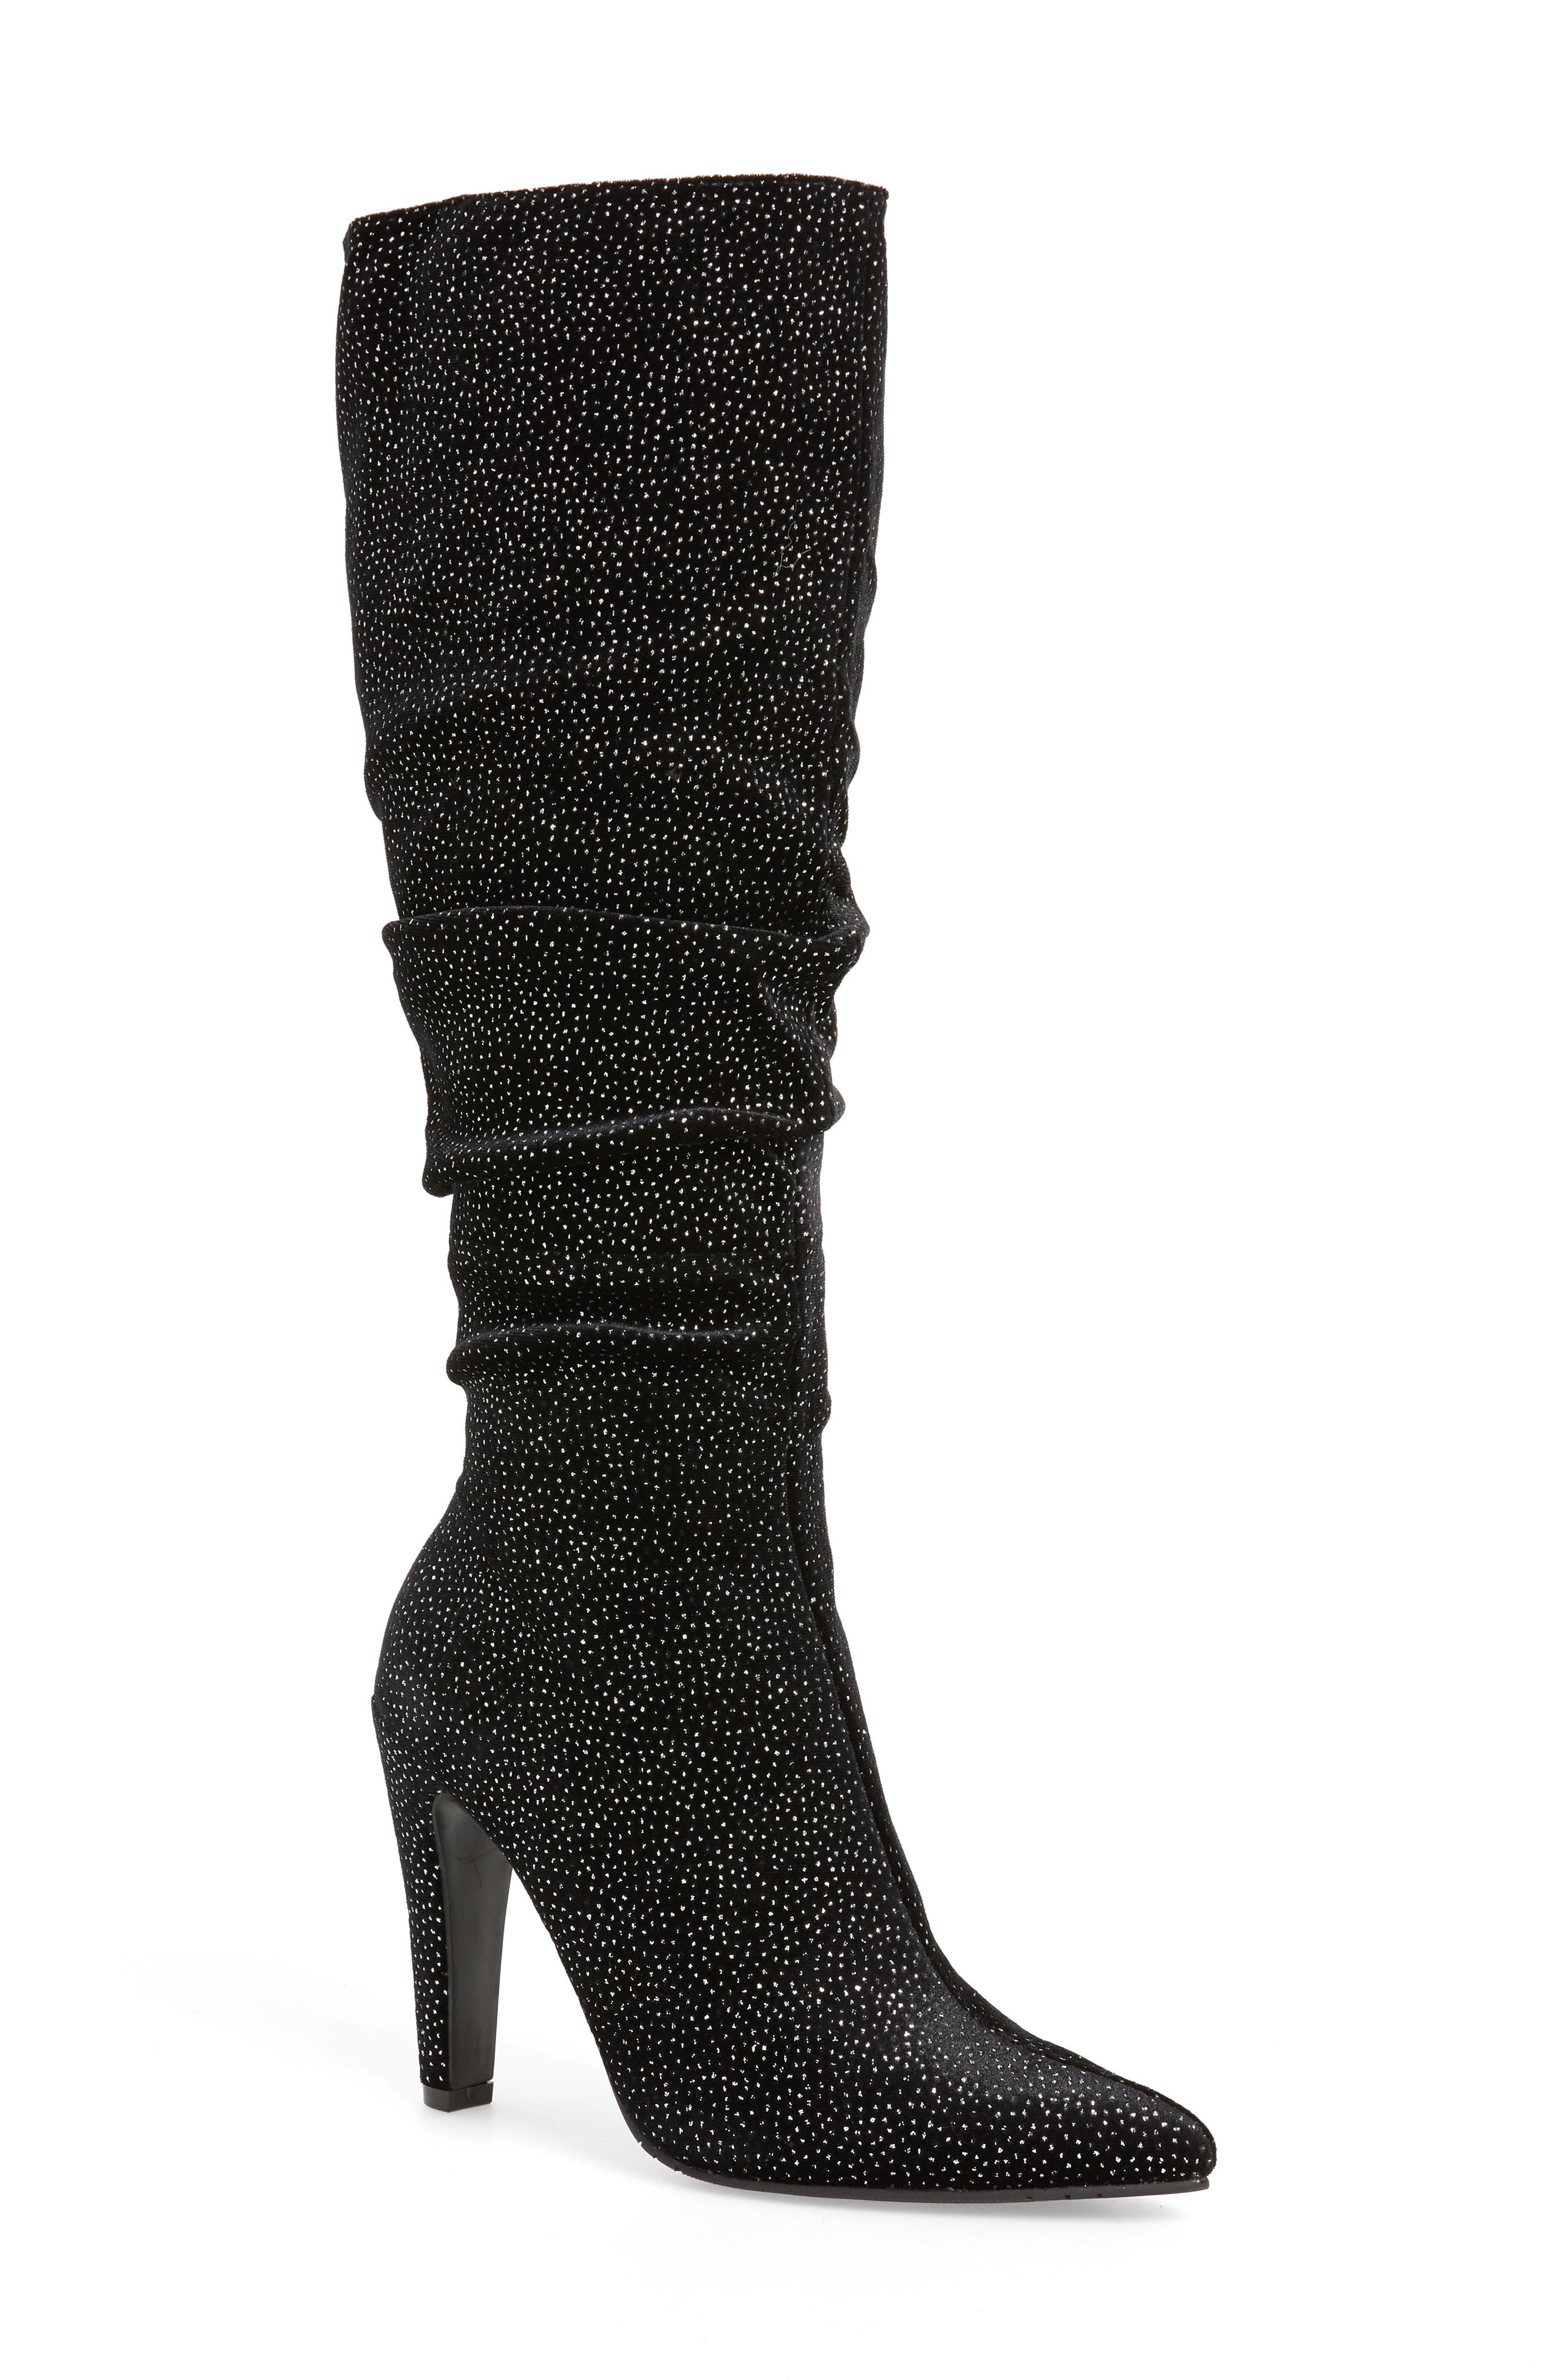 UPC 716142077762 product image for Women's Nina Diandra Knee High Boot, Size 8.5 M - Black | upcitemdb.com